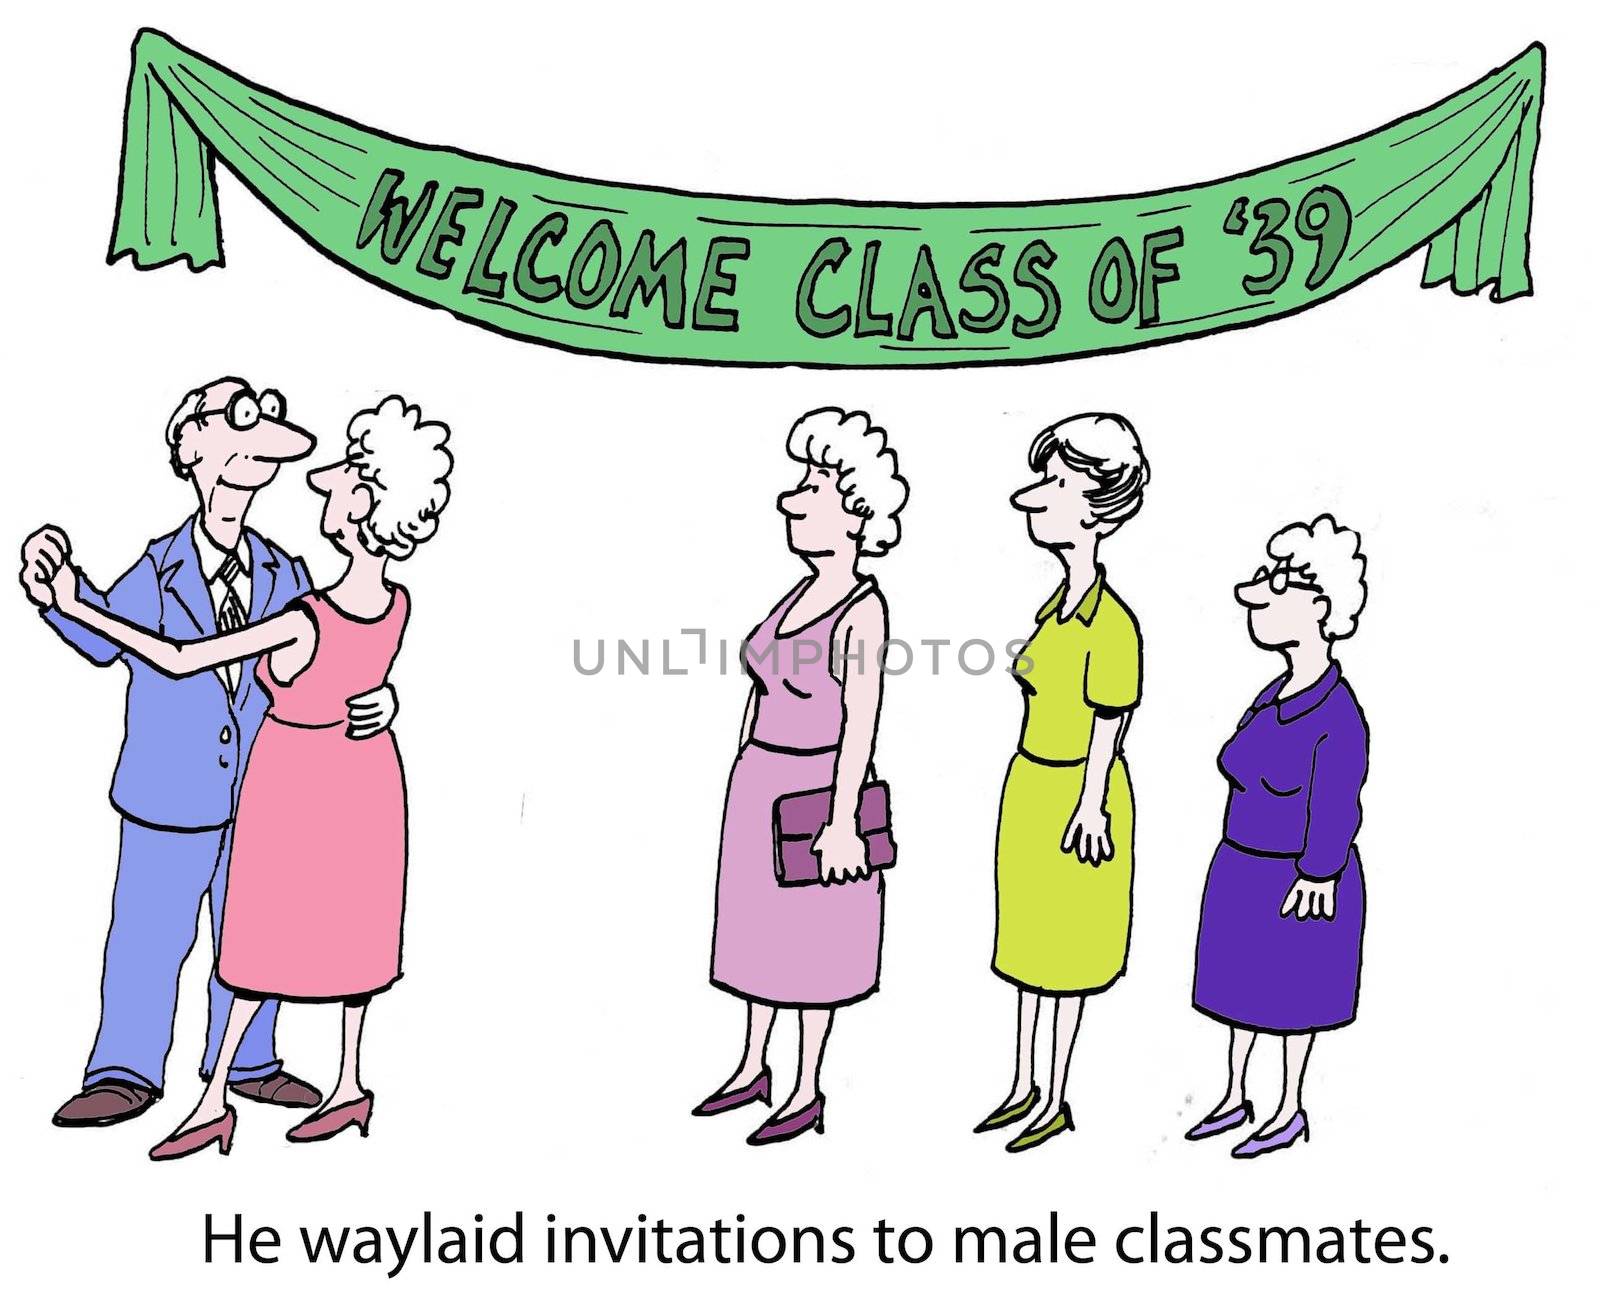 He waylaid invitations to male classmates.